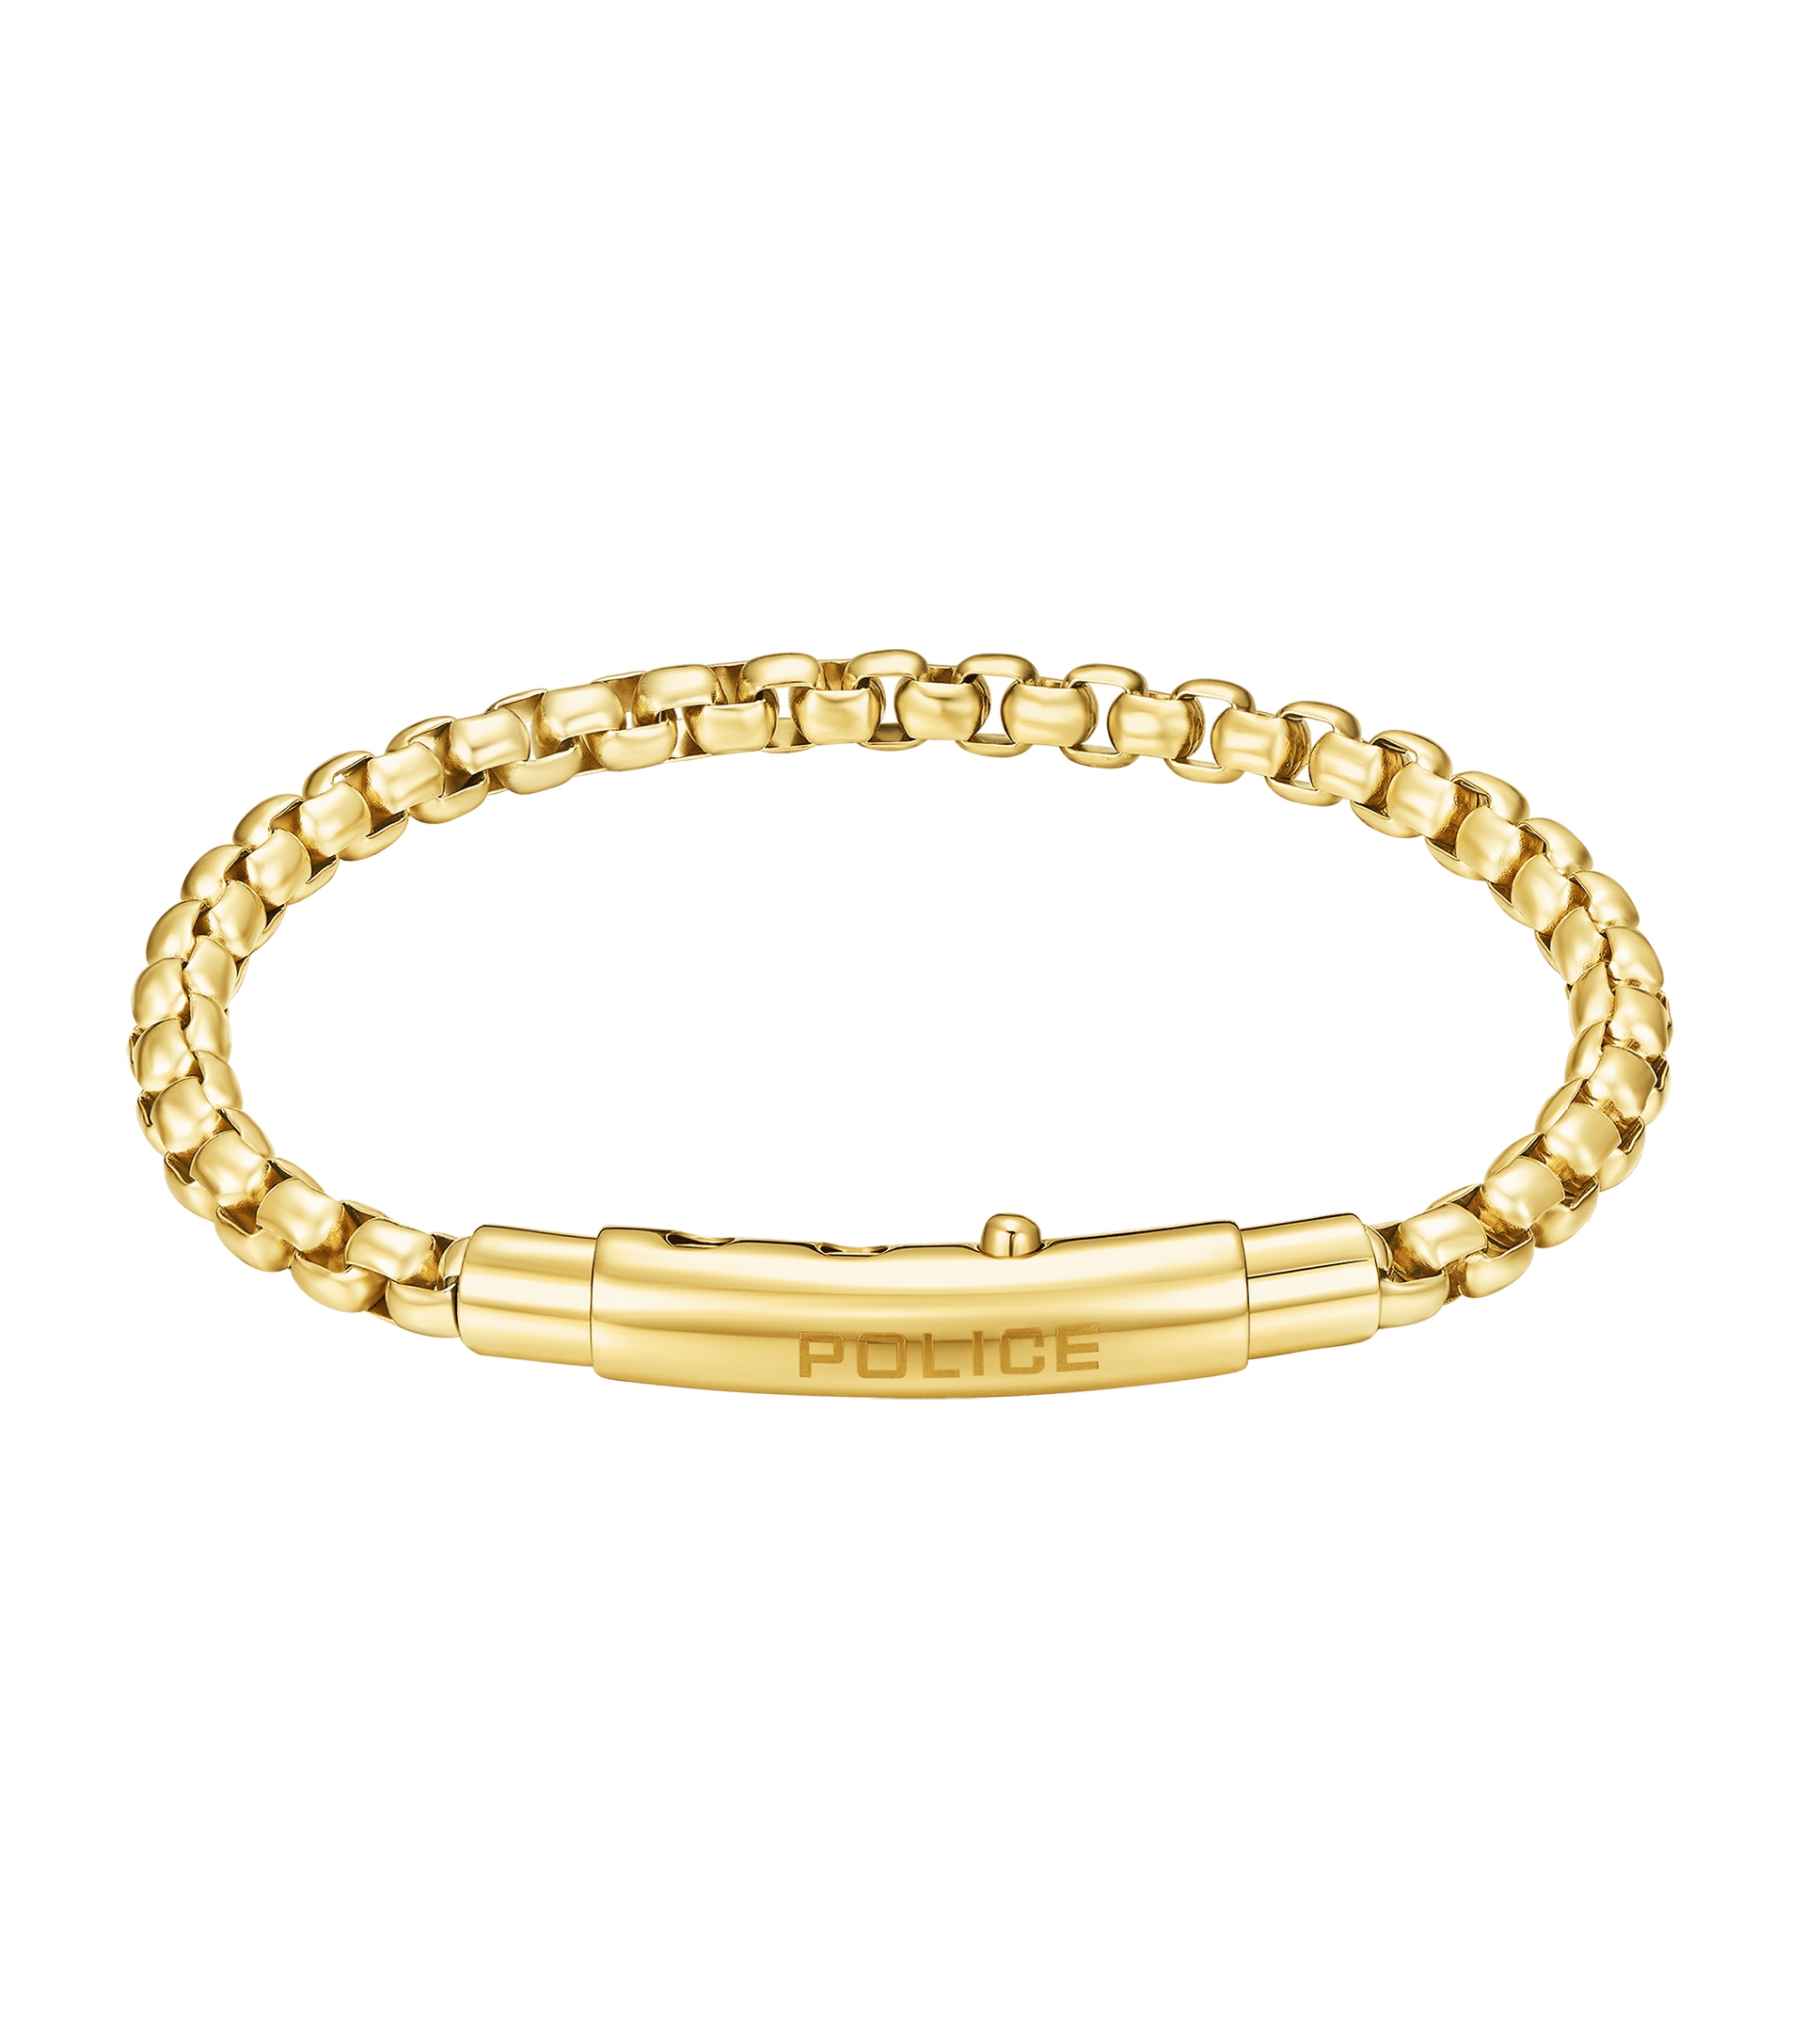 Police jewels - Fleshy Bracelet By Police For Men PEAGB0006202